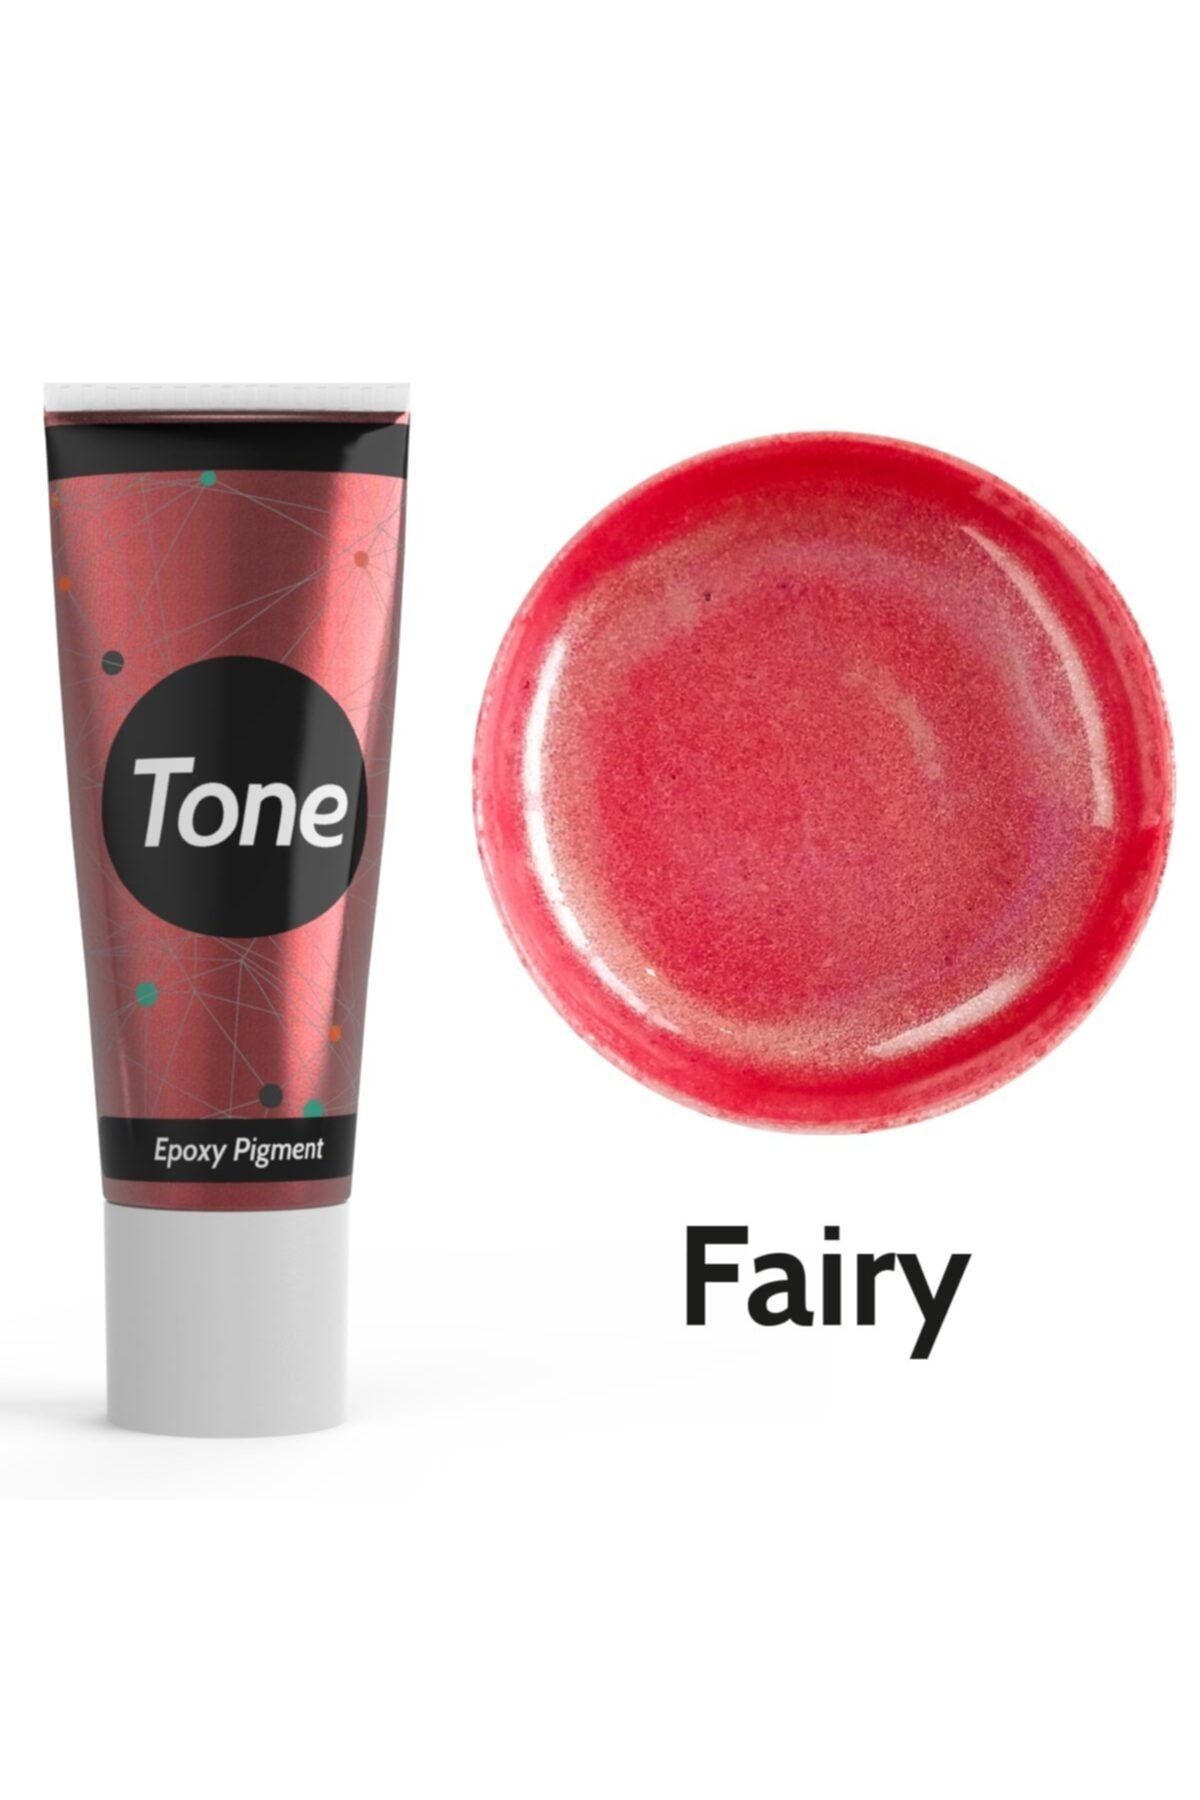 Resinin Tone Pearl Fairy Epoksi Pigment Renklendirici Sedef Renk 30 Ml